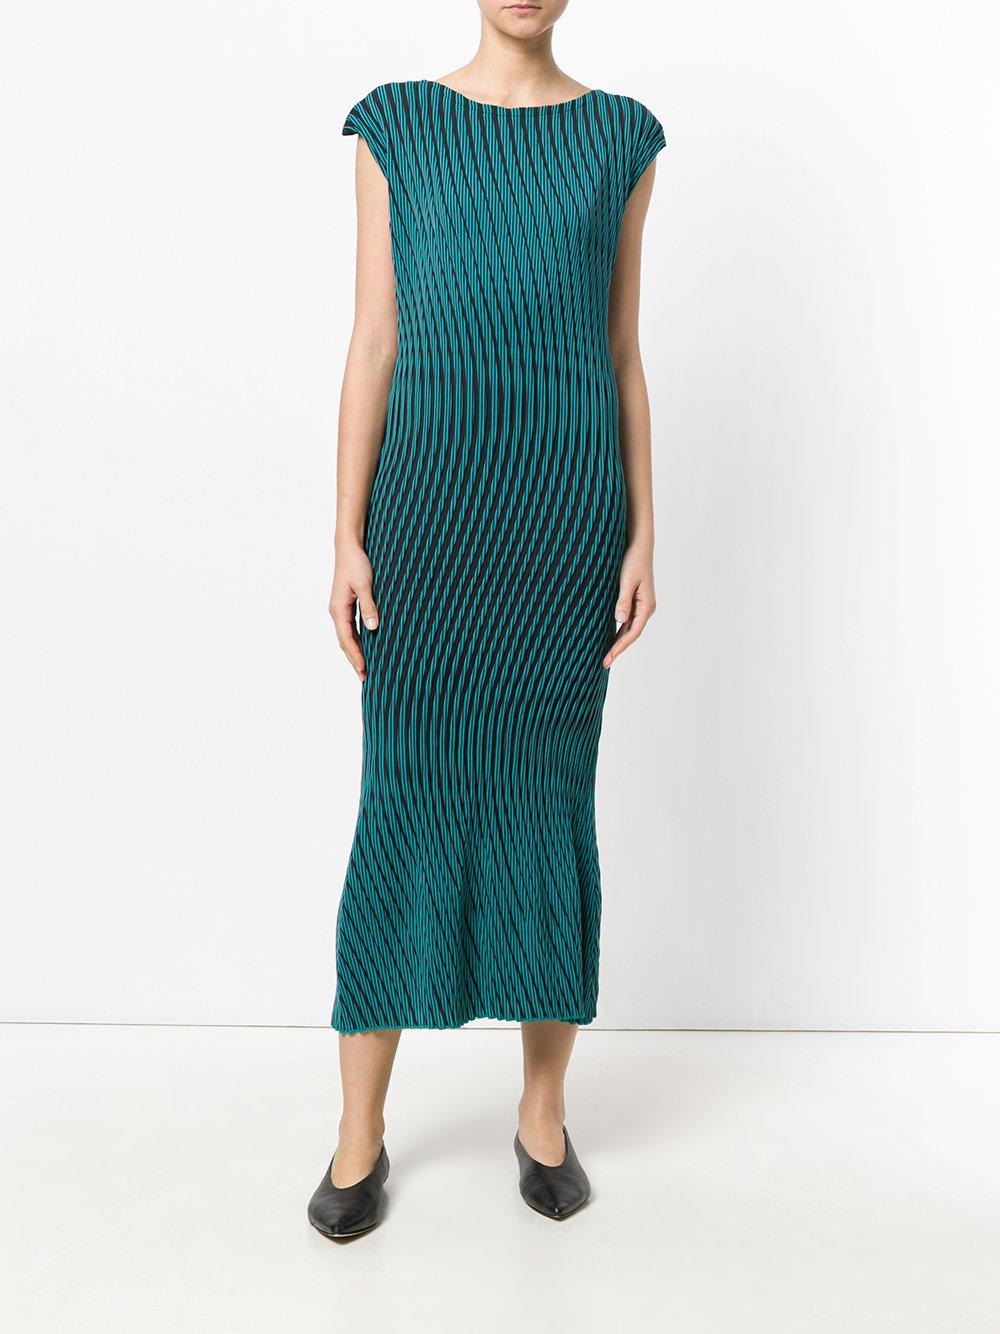 Lyst - Issey Miyake Striped Dress in Green